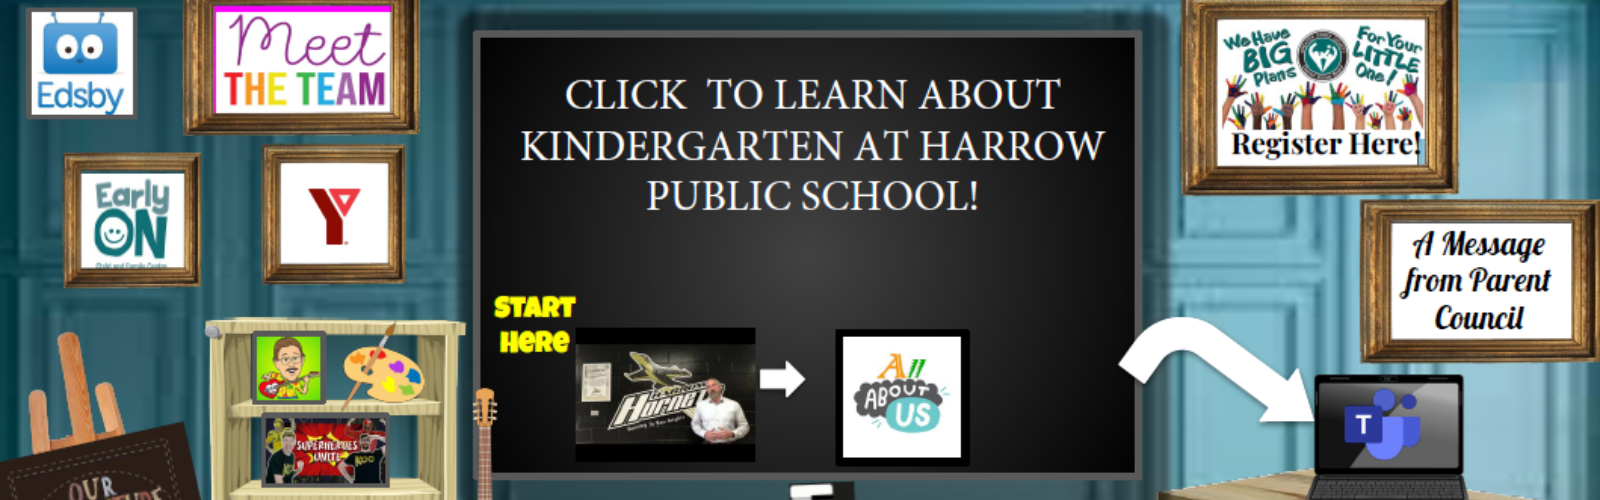 Kindergarten classroom clickable link